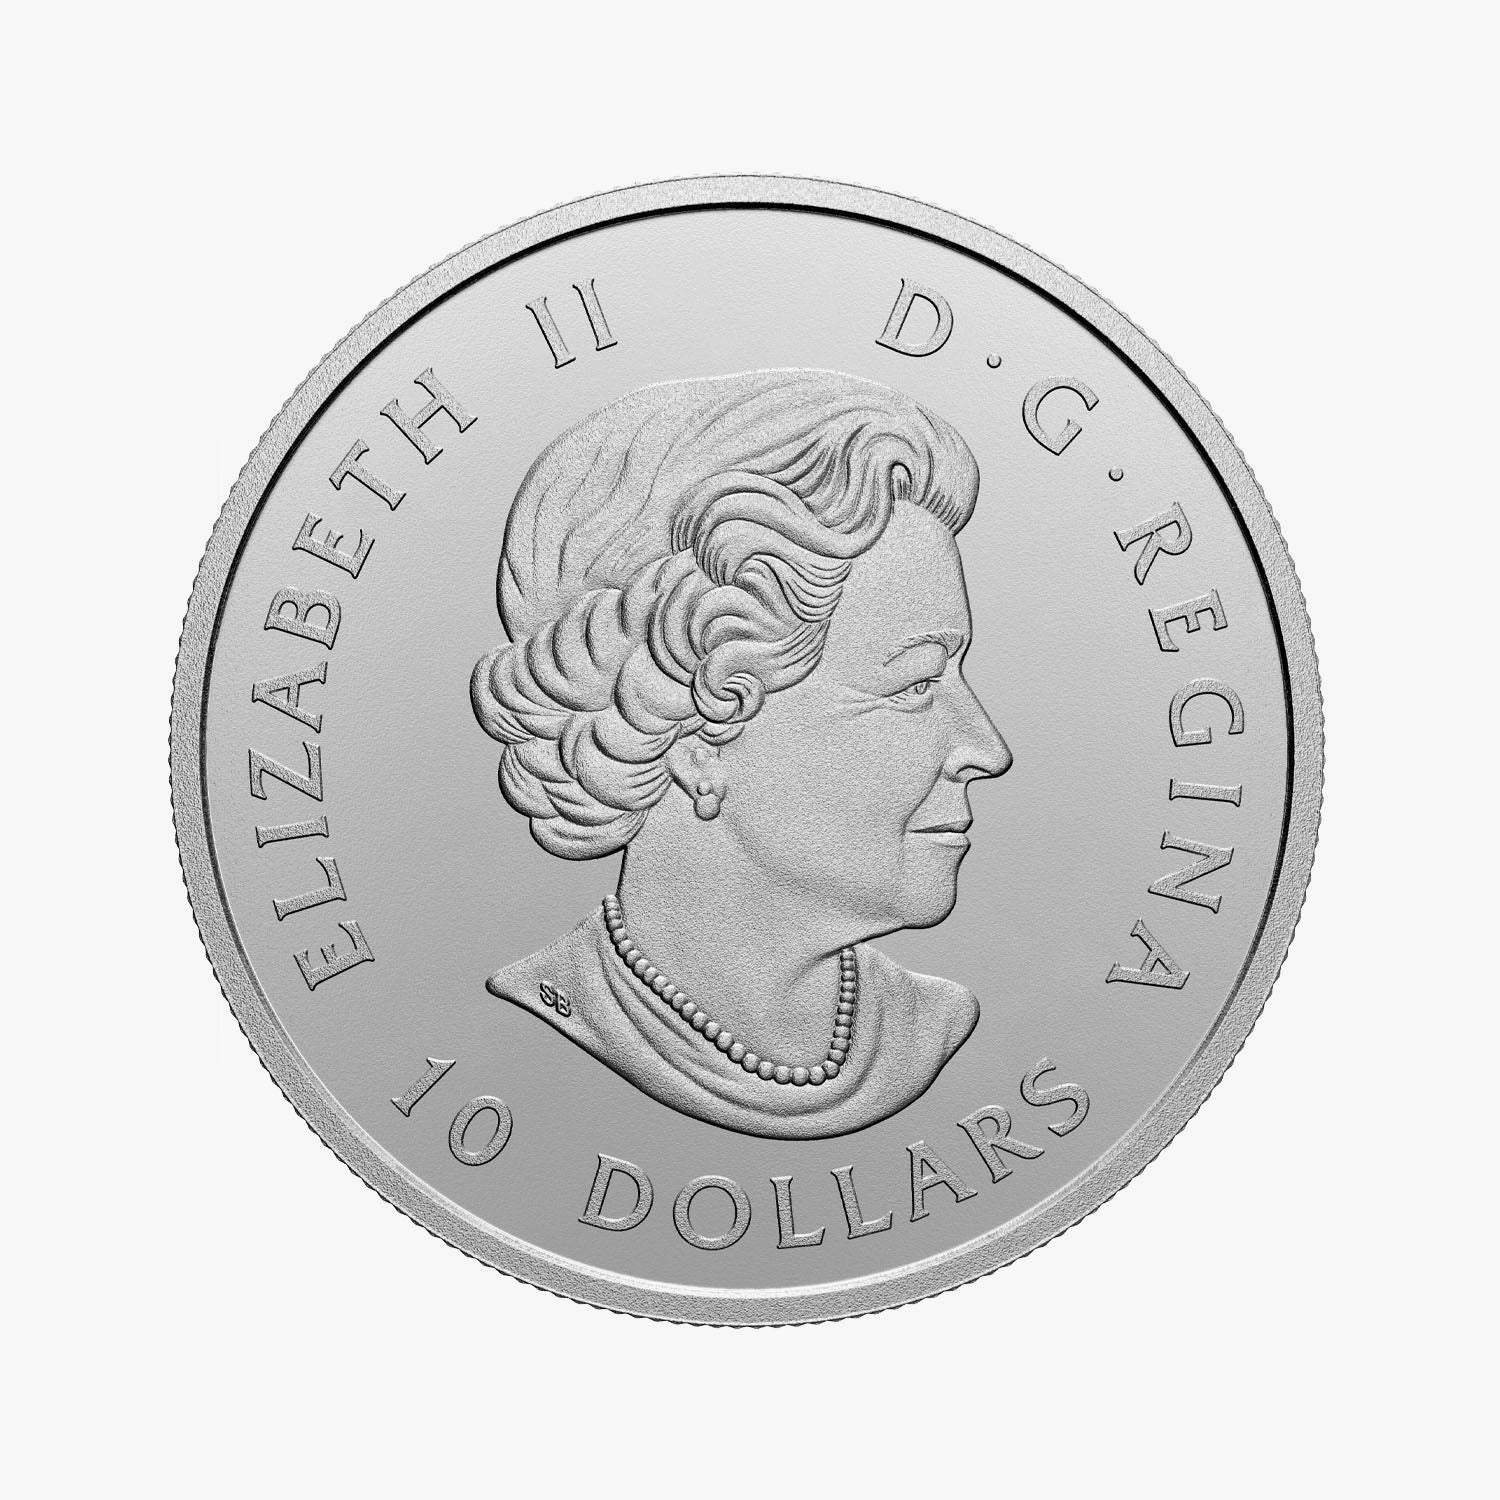 O Canada Maple Leaves Coin